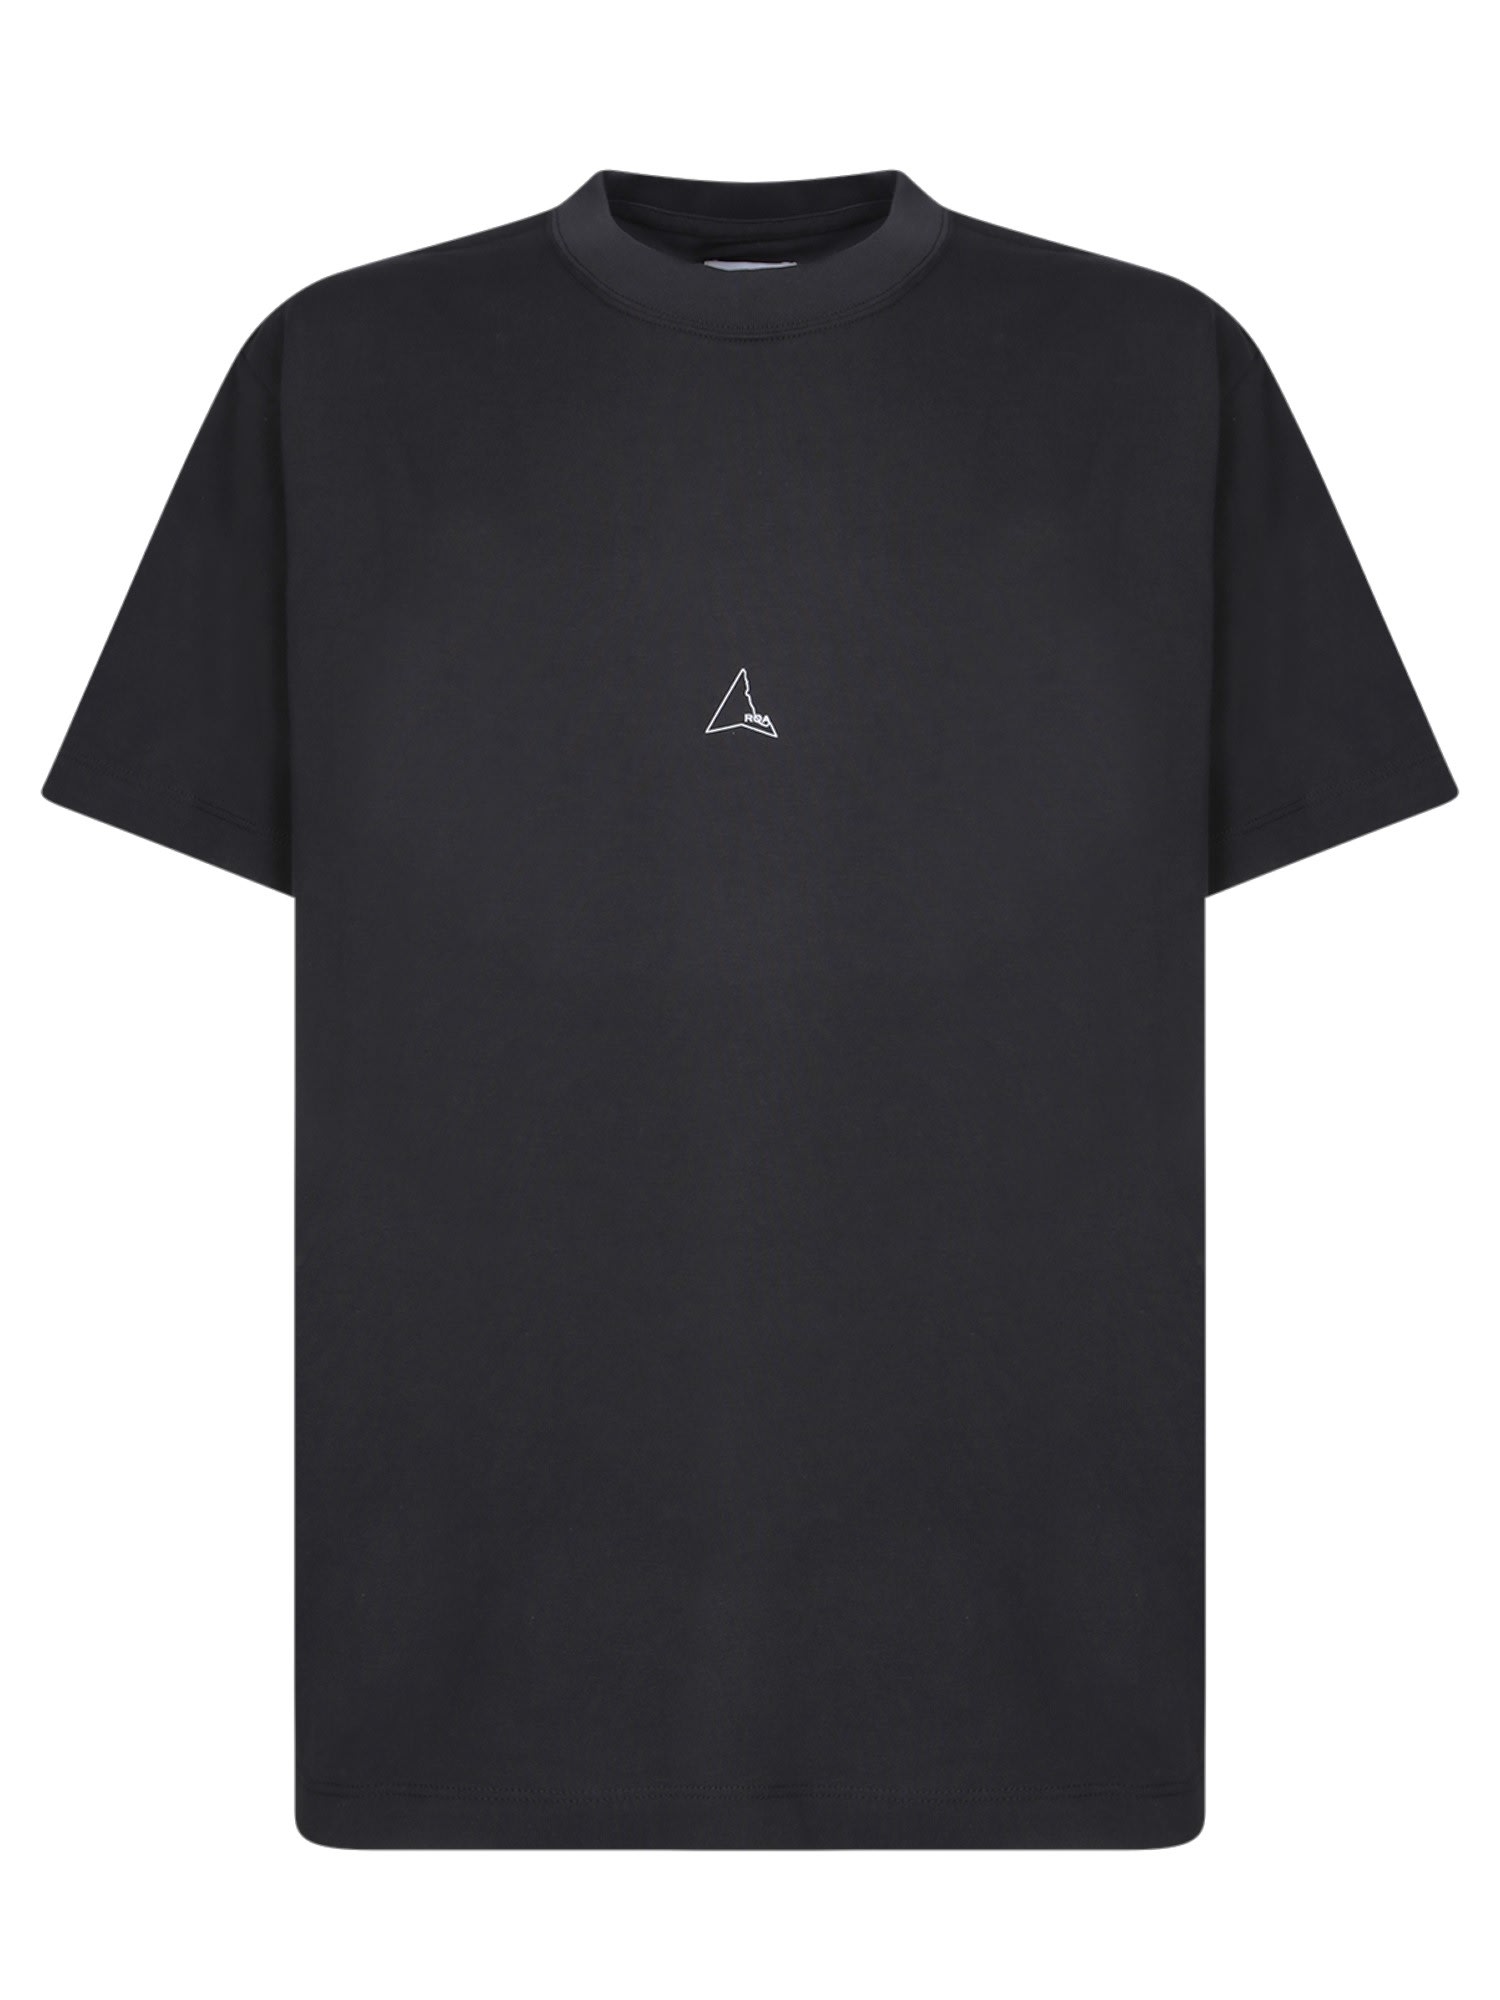 Shop Roa Logo Black T-shirt